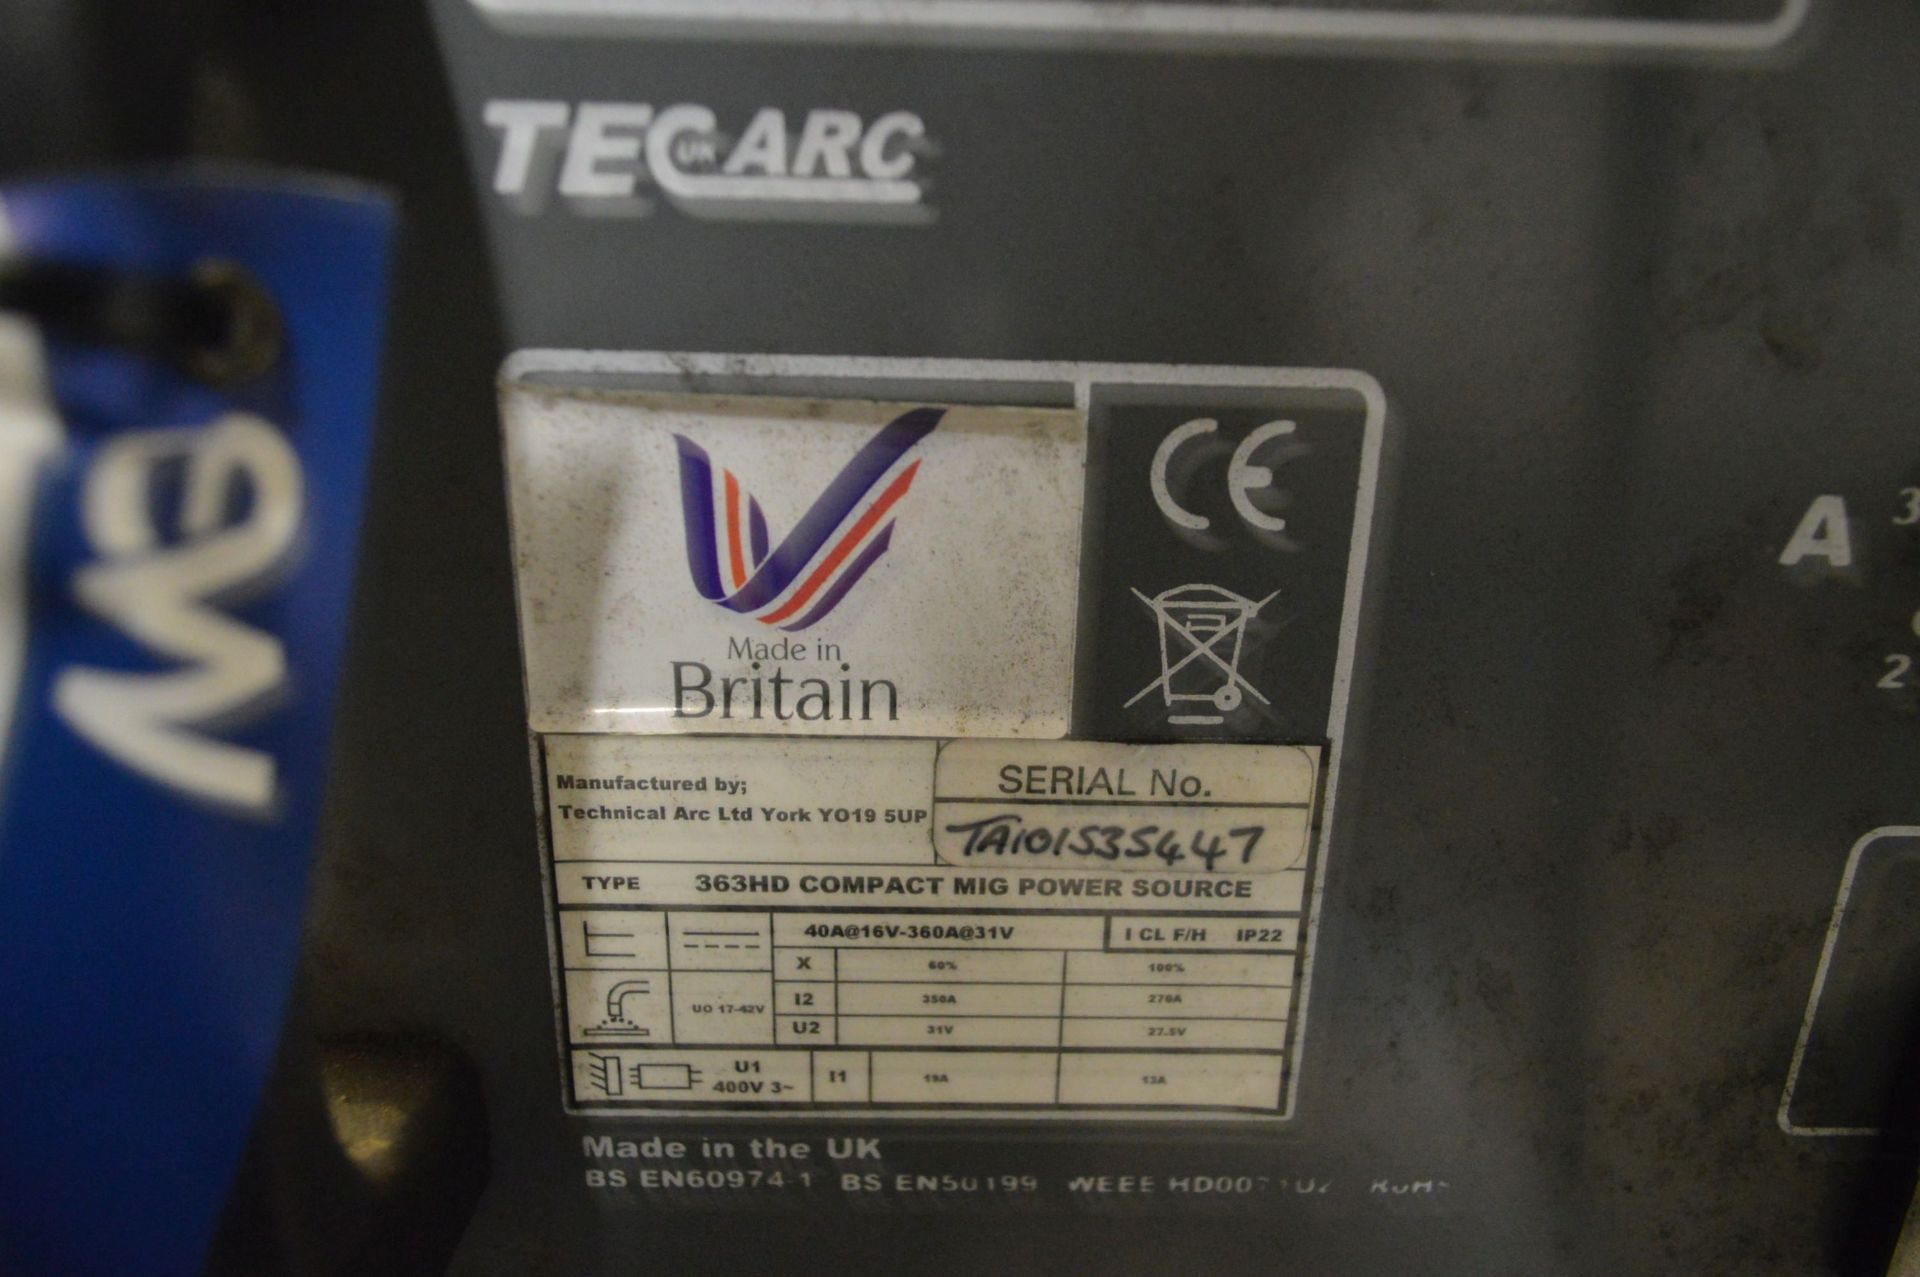 Tecarc T-MIG 363HD COMPACT MIG POWER SOURCE, serial no. TA101535447 - Image 3 of 3